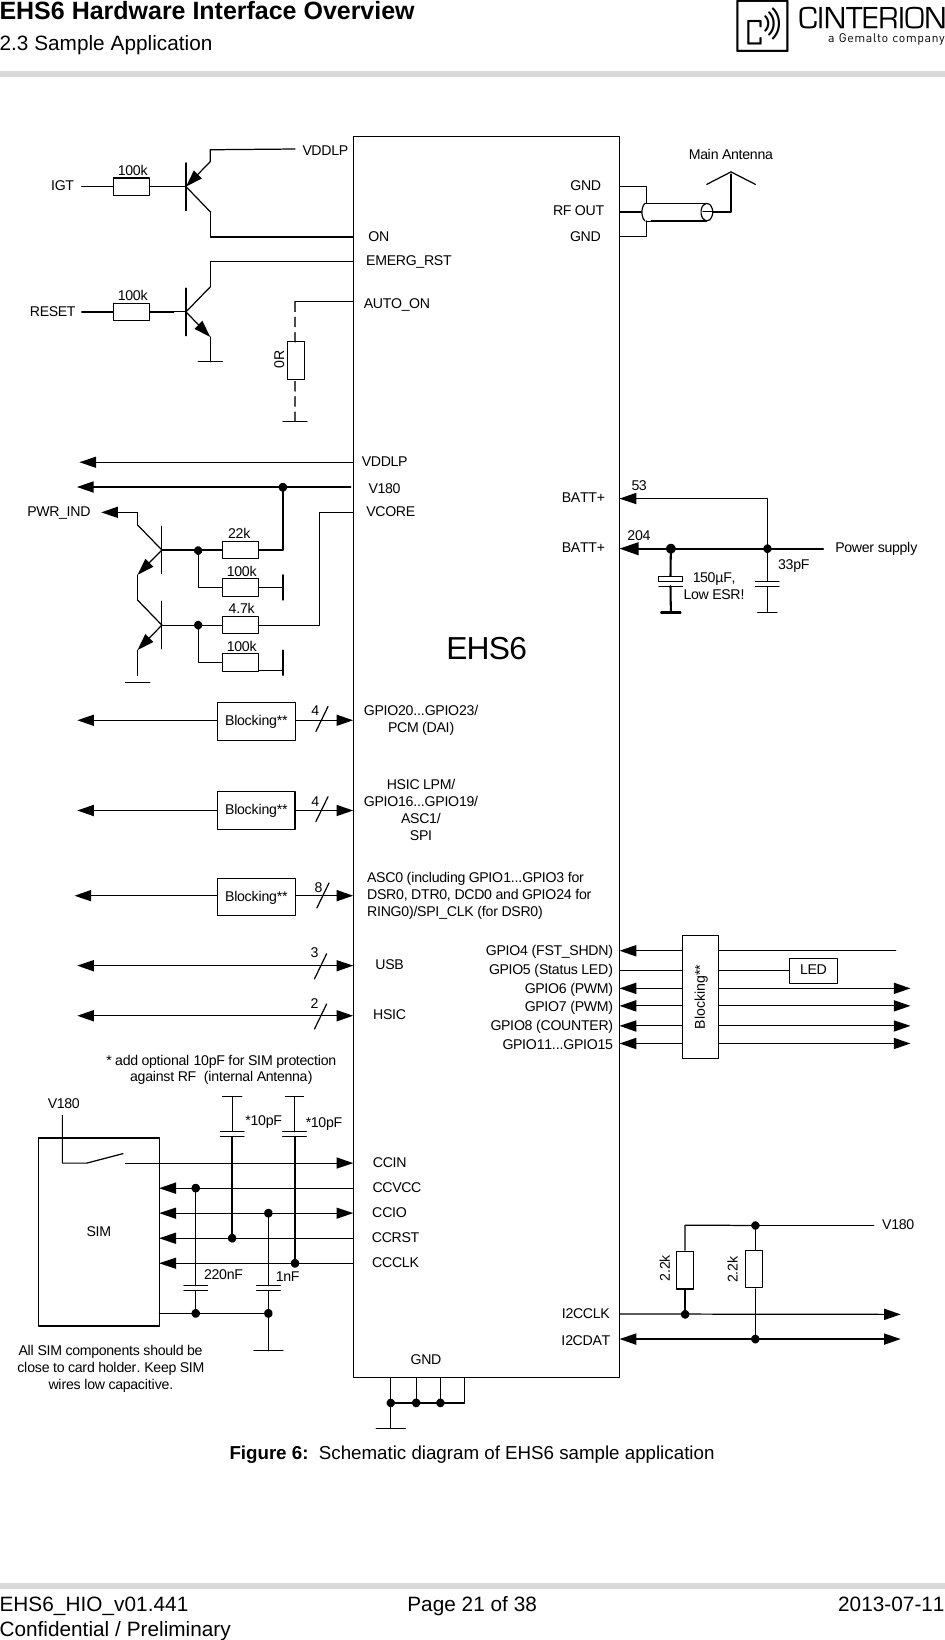 EHS6 Hardware Interface Overview2.3 Sample Application21EHS6_HIO_v01.441 Page 21 of 38 2013-07-11Confidential / PreliminaryFigure 6:  Schematic diagram of EHS6 sample applicationONEMERG_RSTVCOREV180IGTRESETASC0 (including GPIO1...GPIO3 for DSR0, DTR0, DCD0 and GPIO24 for RING0)/SPI_CLK (for DSR0)HSIC LPM/GPIO16...GPIO19/ASC1/SPI84CCVCCCCIOCCCLKCCINCCRSTSIMV180220nF 1nFI2CCLKI2CDAT2.2kV180GPIO4 (FST_SHDN) GPIO5 (Status LED)GPIO6 (PWM)GPIO7 (PWM)GPIO8 (COUNTER)GPIO11...GPIO15LEDGNDGNDGNDRF OUTBATT+Power supplyMain AntennaEHS6All SIM components should be close to card holder. Keep SIM wires low capacitive.*10pF *10pF* add optional 10pF for SIM protection against RF  (internal Antenna)150µF,Low ESR!33pFBlocking**Blocking**2HSICBlocking**VDDLPPWR_INDAUTO_ONBATT+53204GPIO20...GPIO23/PCM (DAI)4Blocking**VDDLP100k100k100k4.7k100k22k2.2k0R3USB